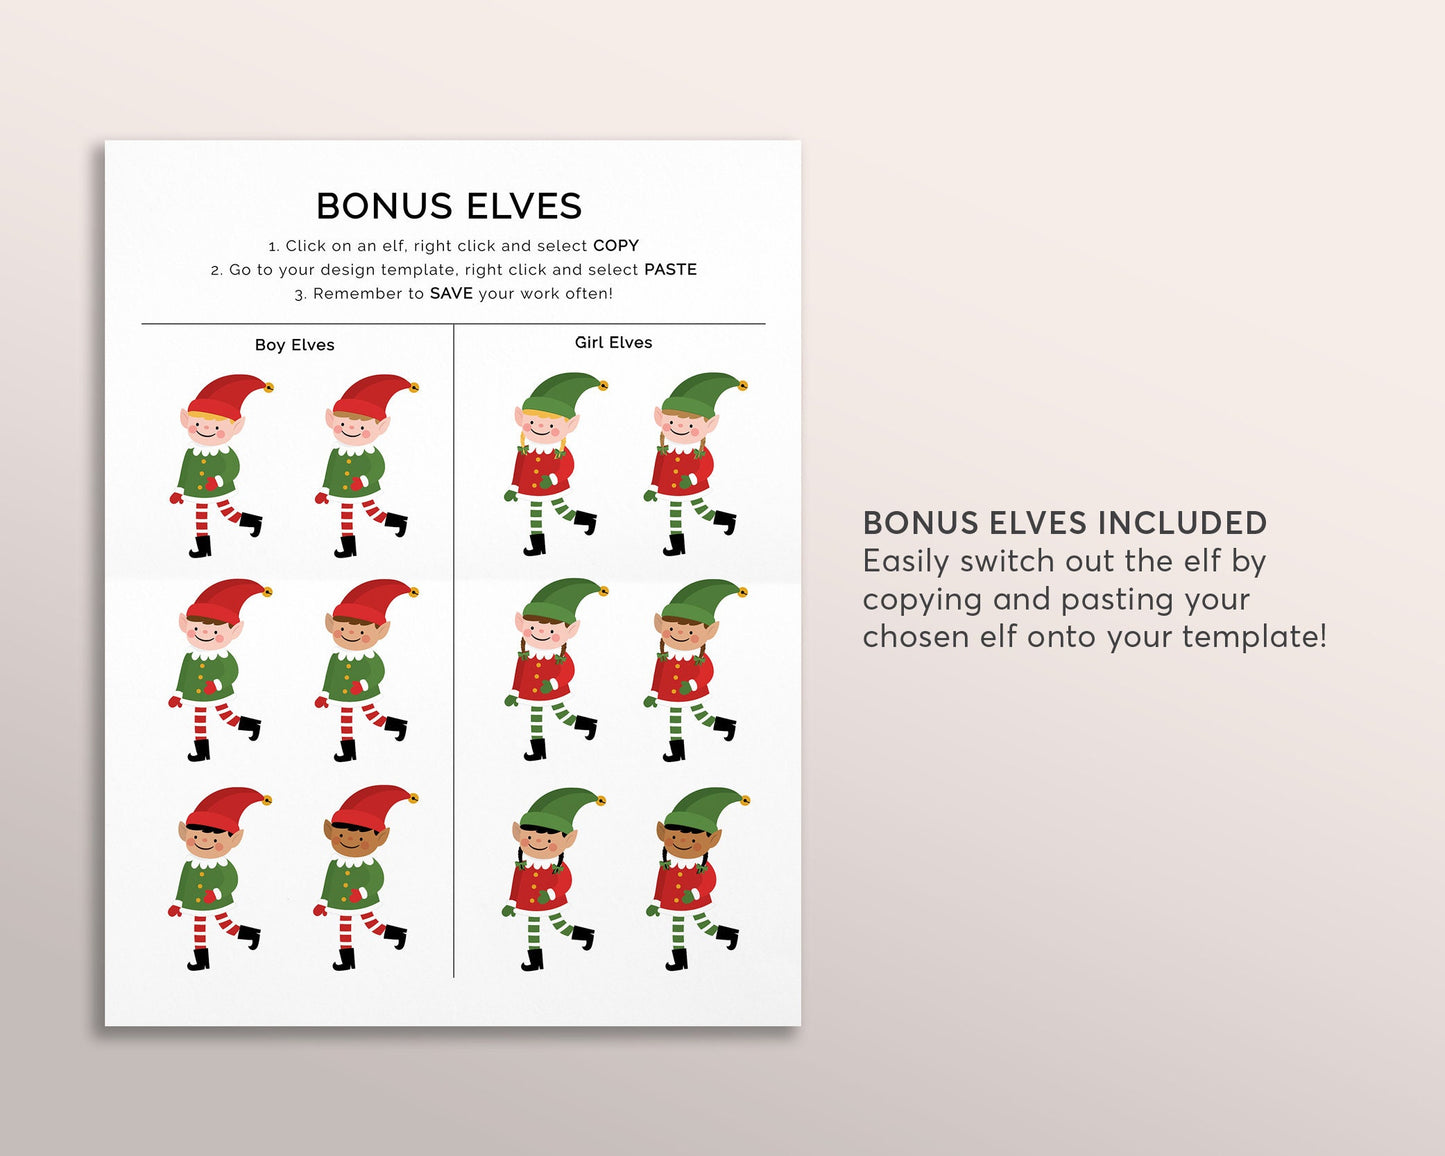 Secret Elves Gift Exchange Invitation Editable Template, Secret Elf Santa Holiday Christmas Xmas Gift Swap Party for Children Kids Adults